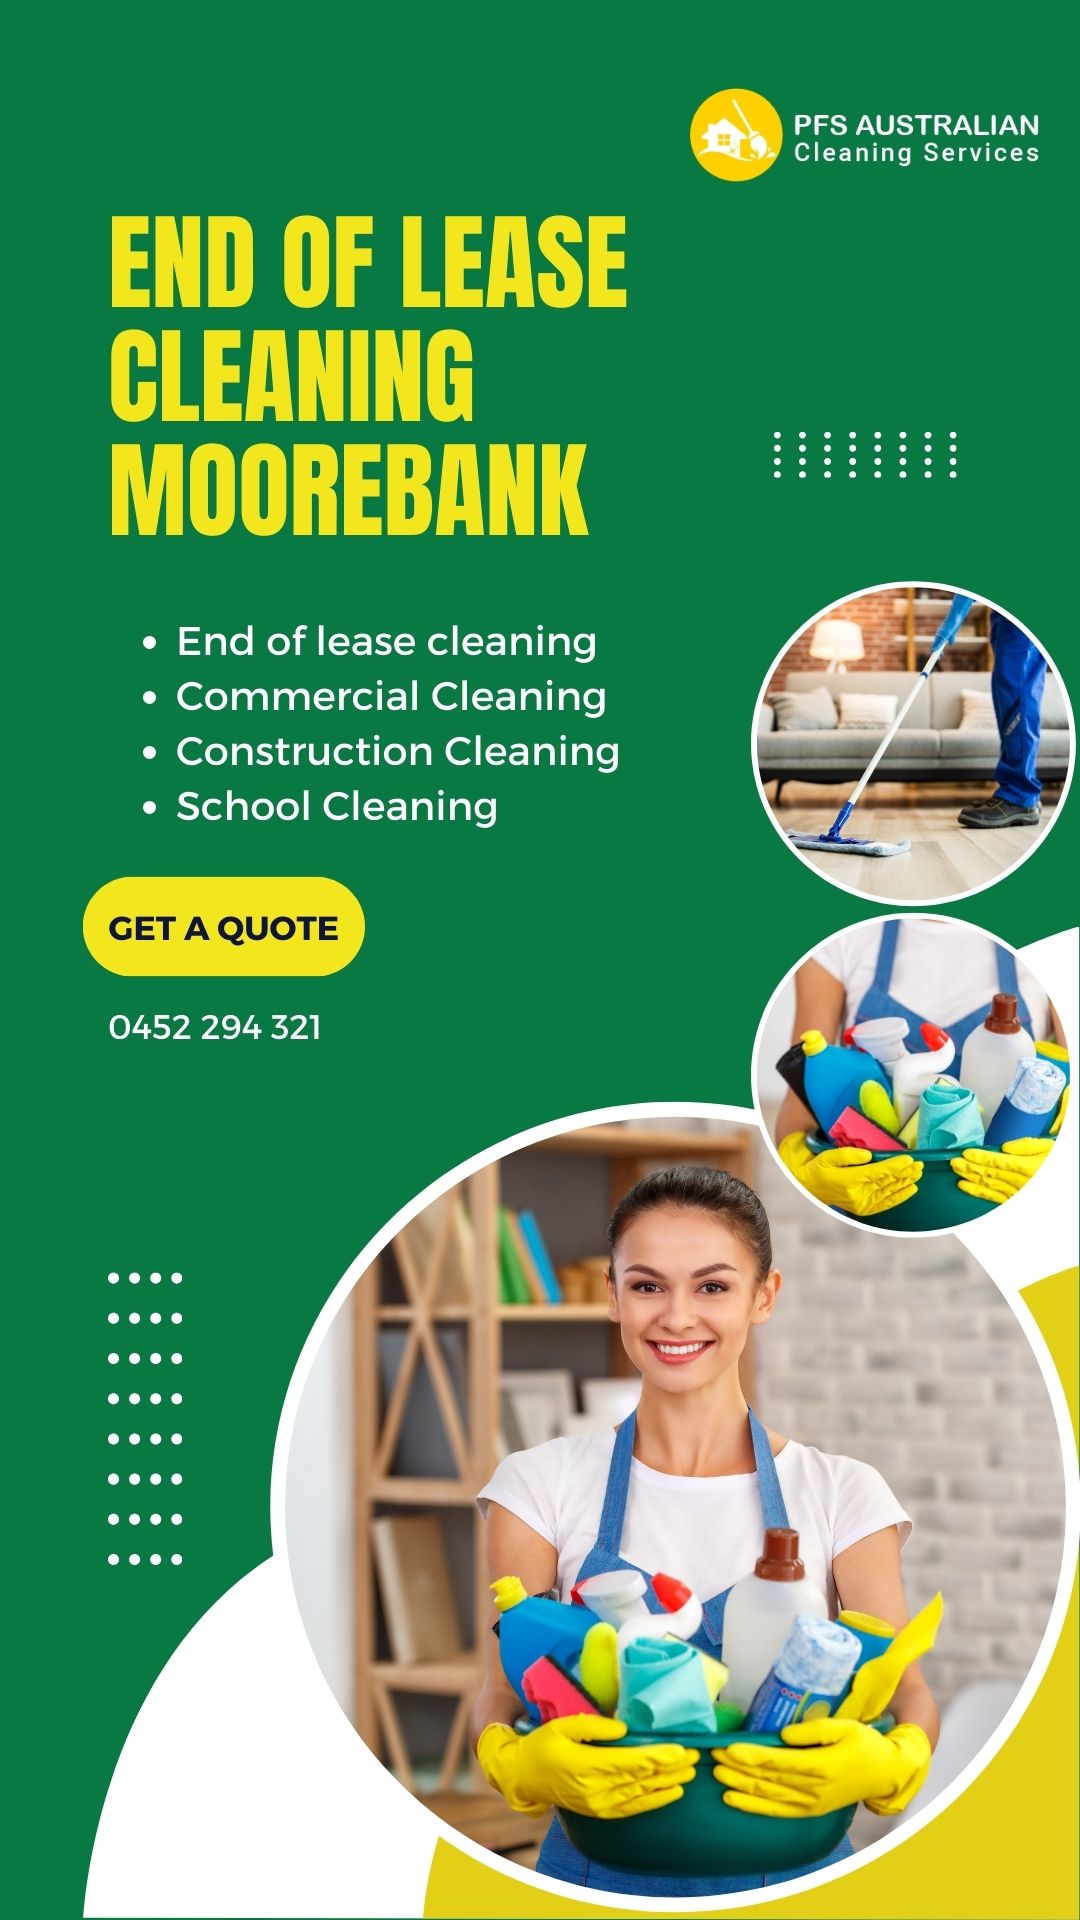 End of lease cleaning moorebank